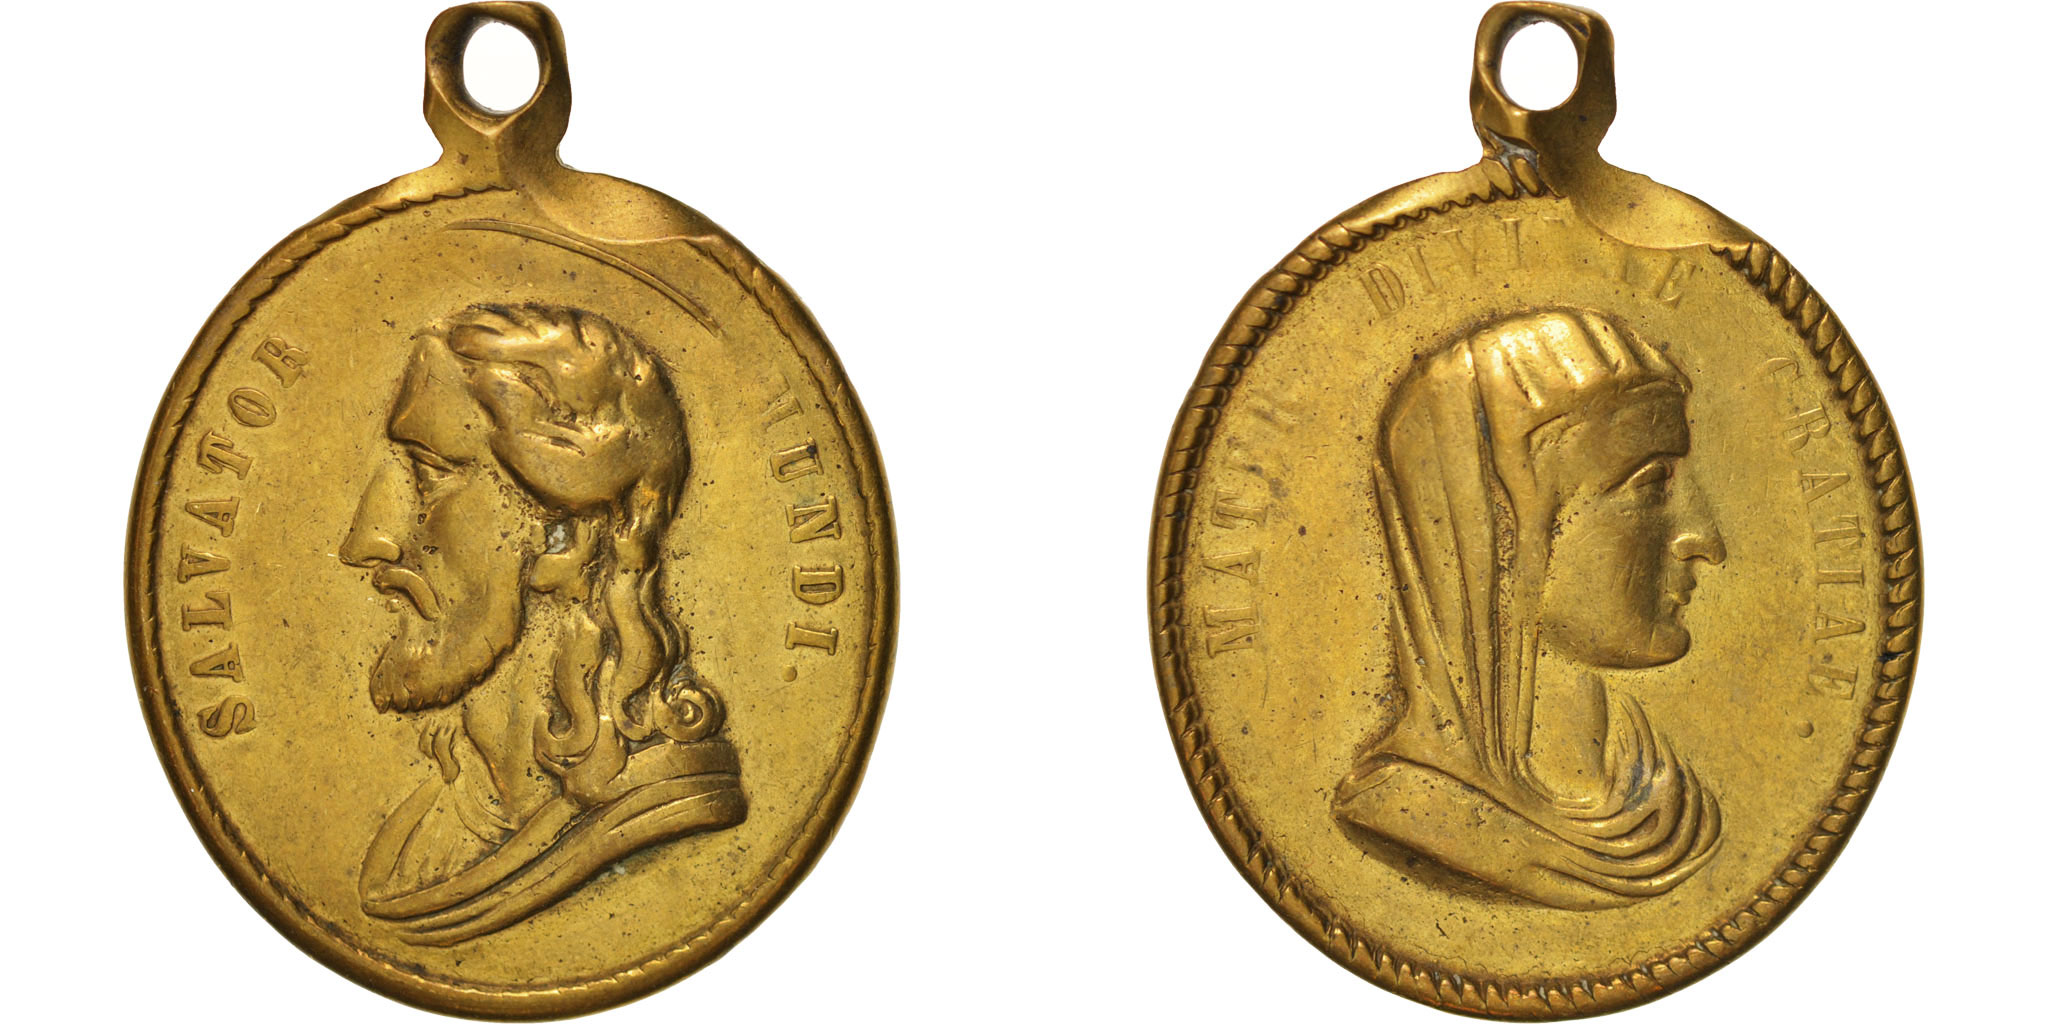 France, Medal, Religious medal, Religions & beliefs, 18TH CENTURY,